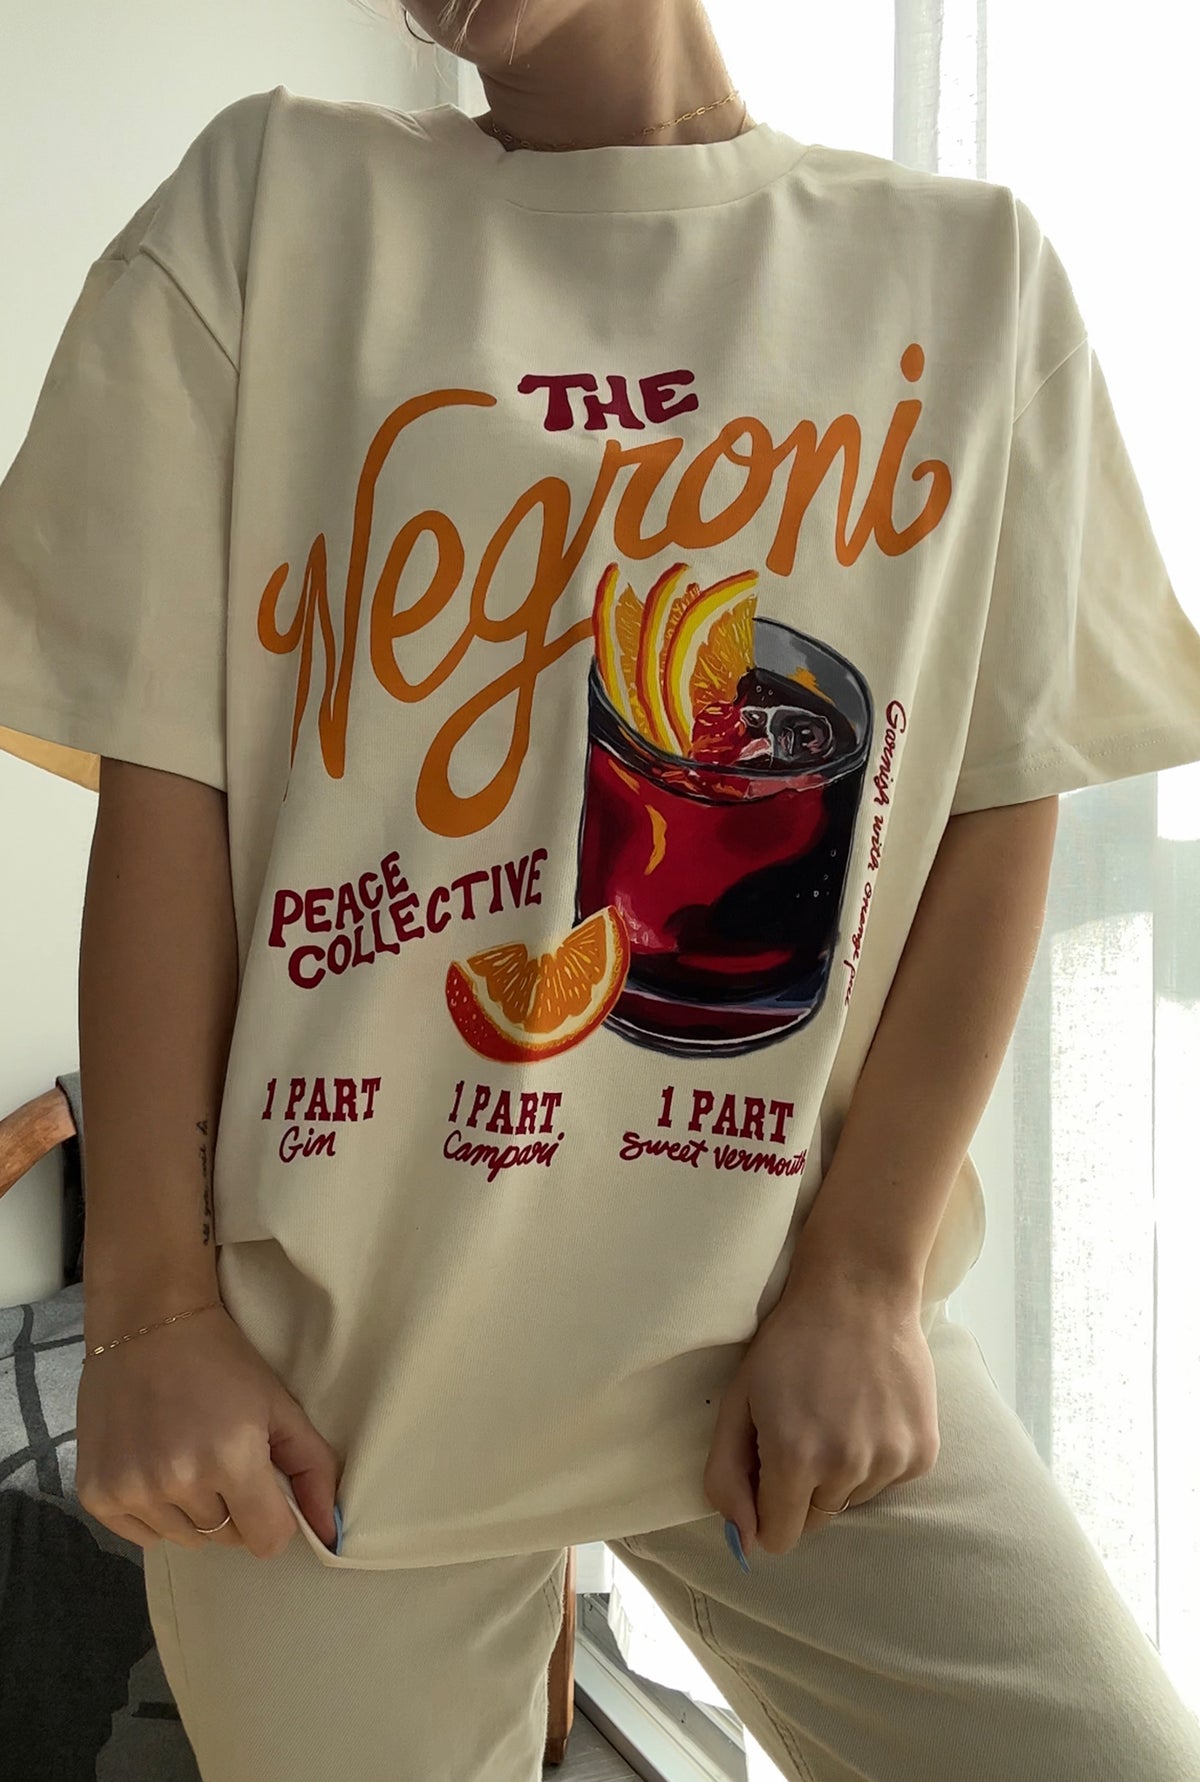 The Negroni Premium T-Shirt - Natural